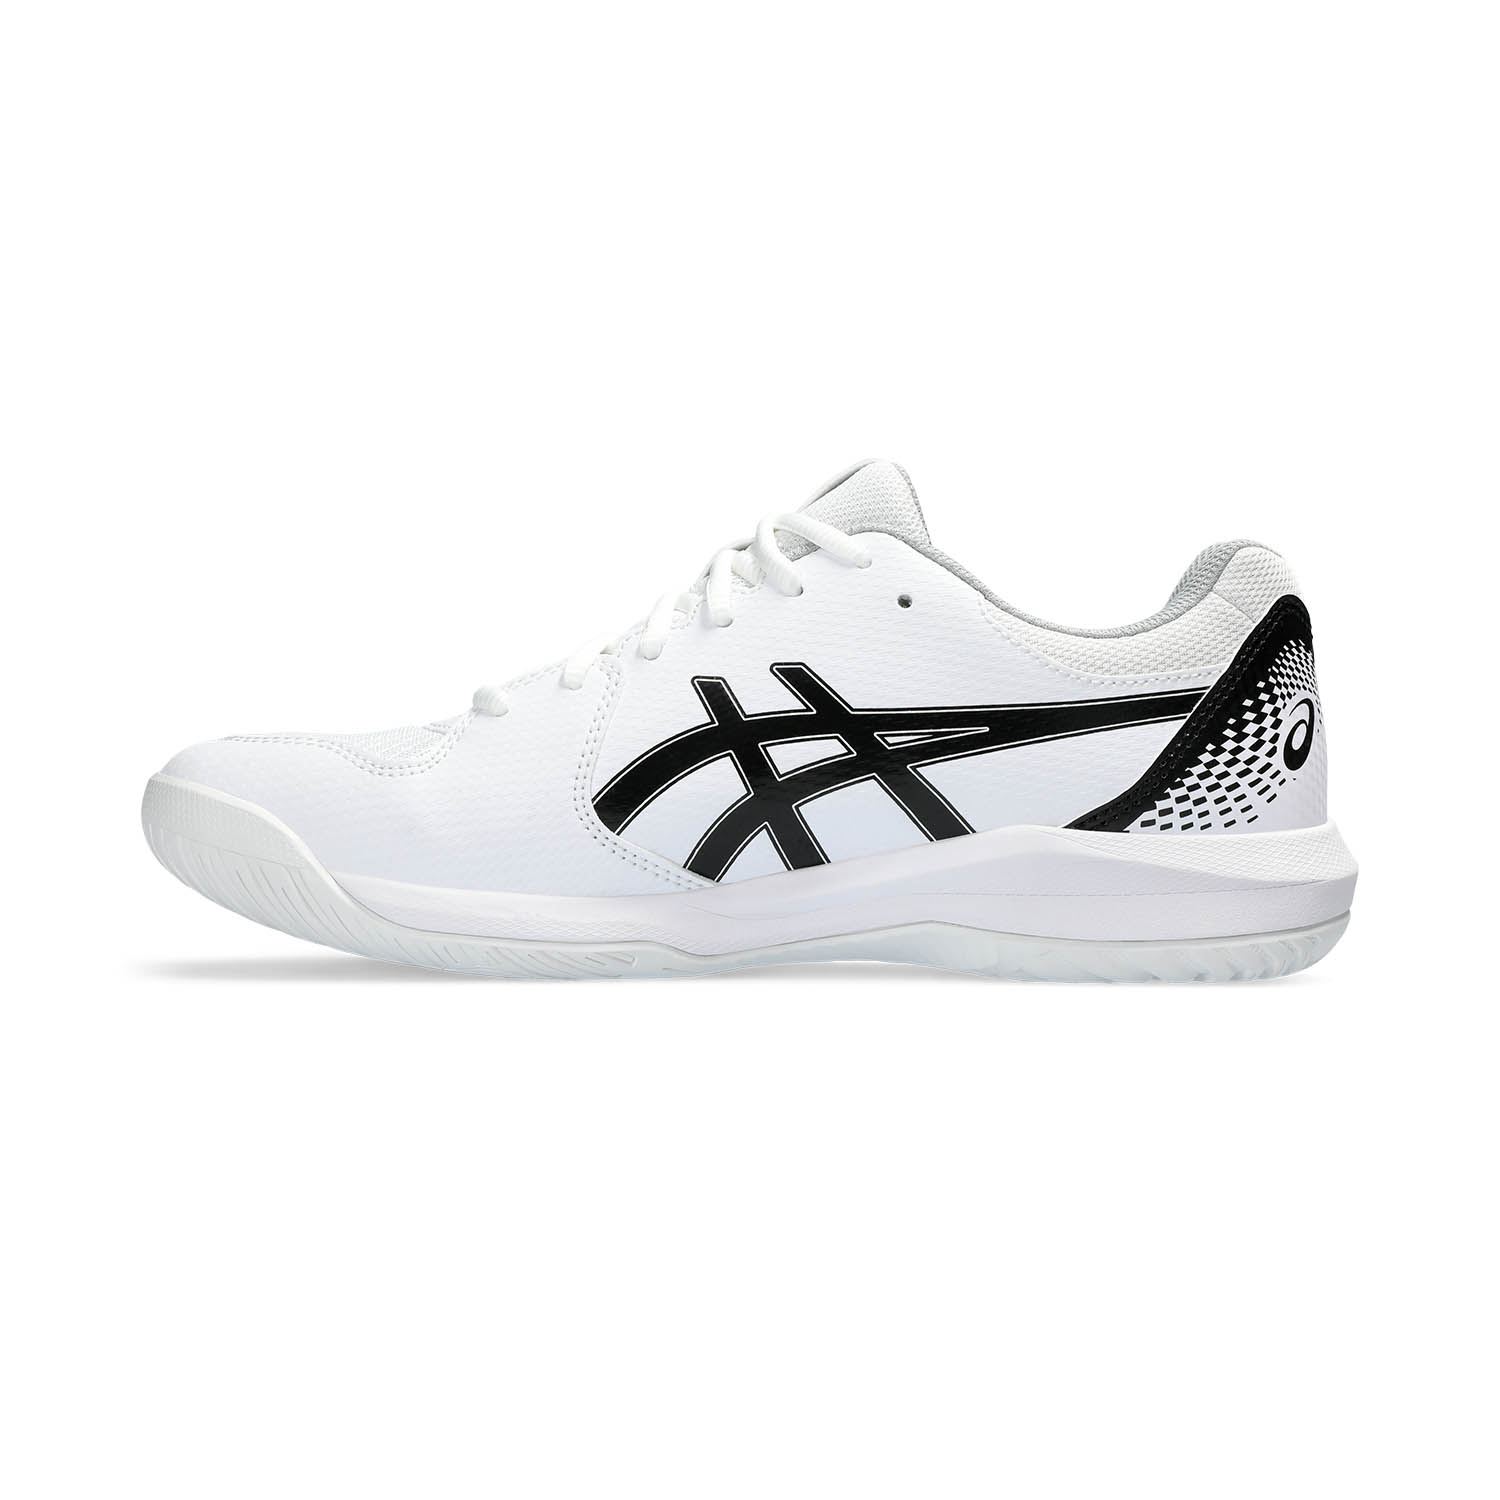 Asics Gel Dedicate 8 Men's Tennis Shoes - White/Black